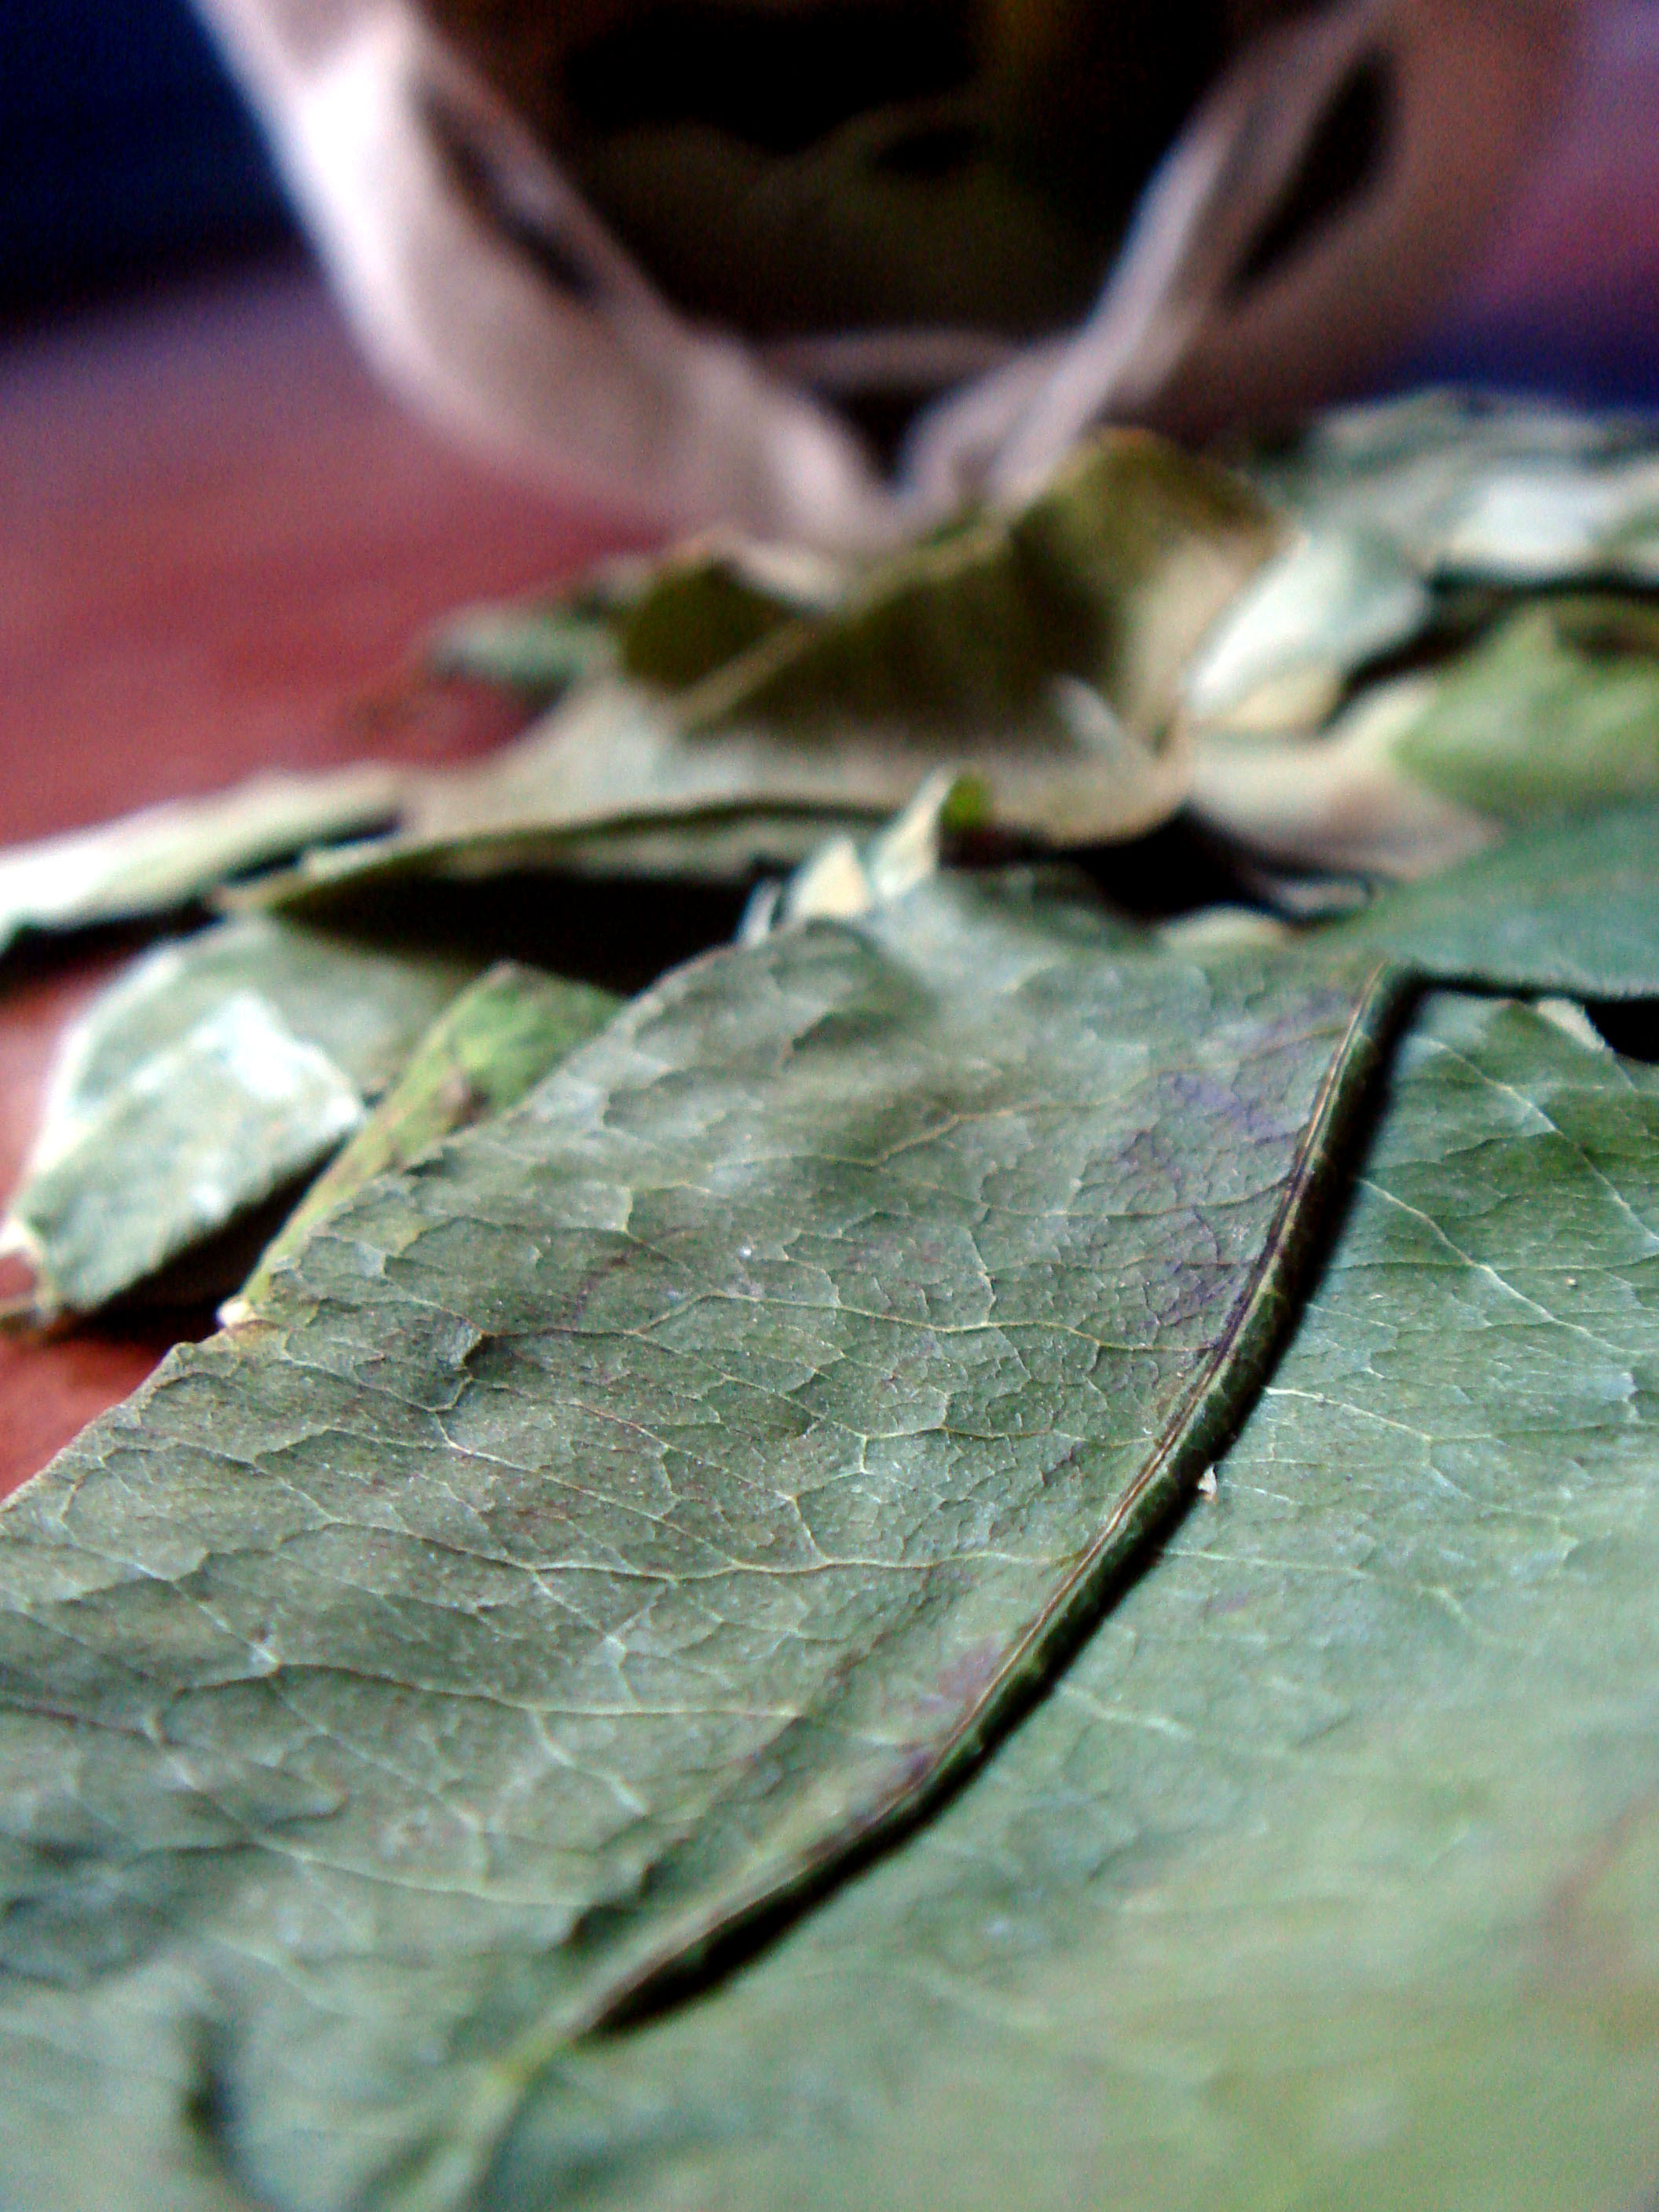 coca leaves